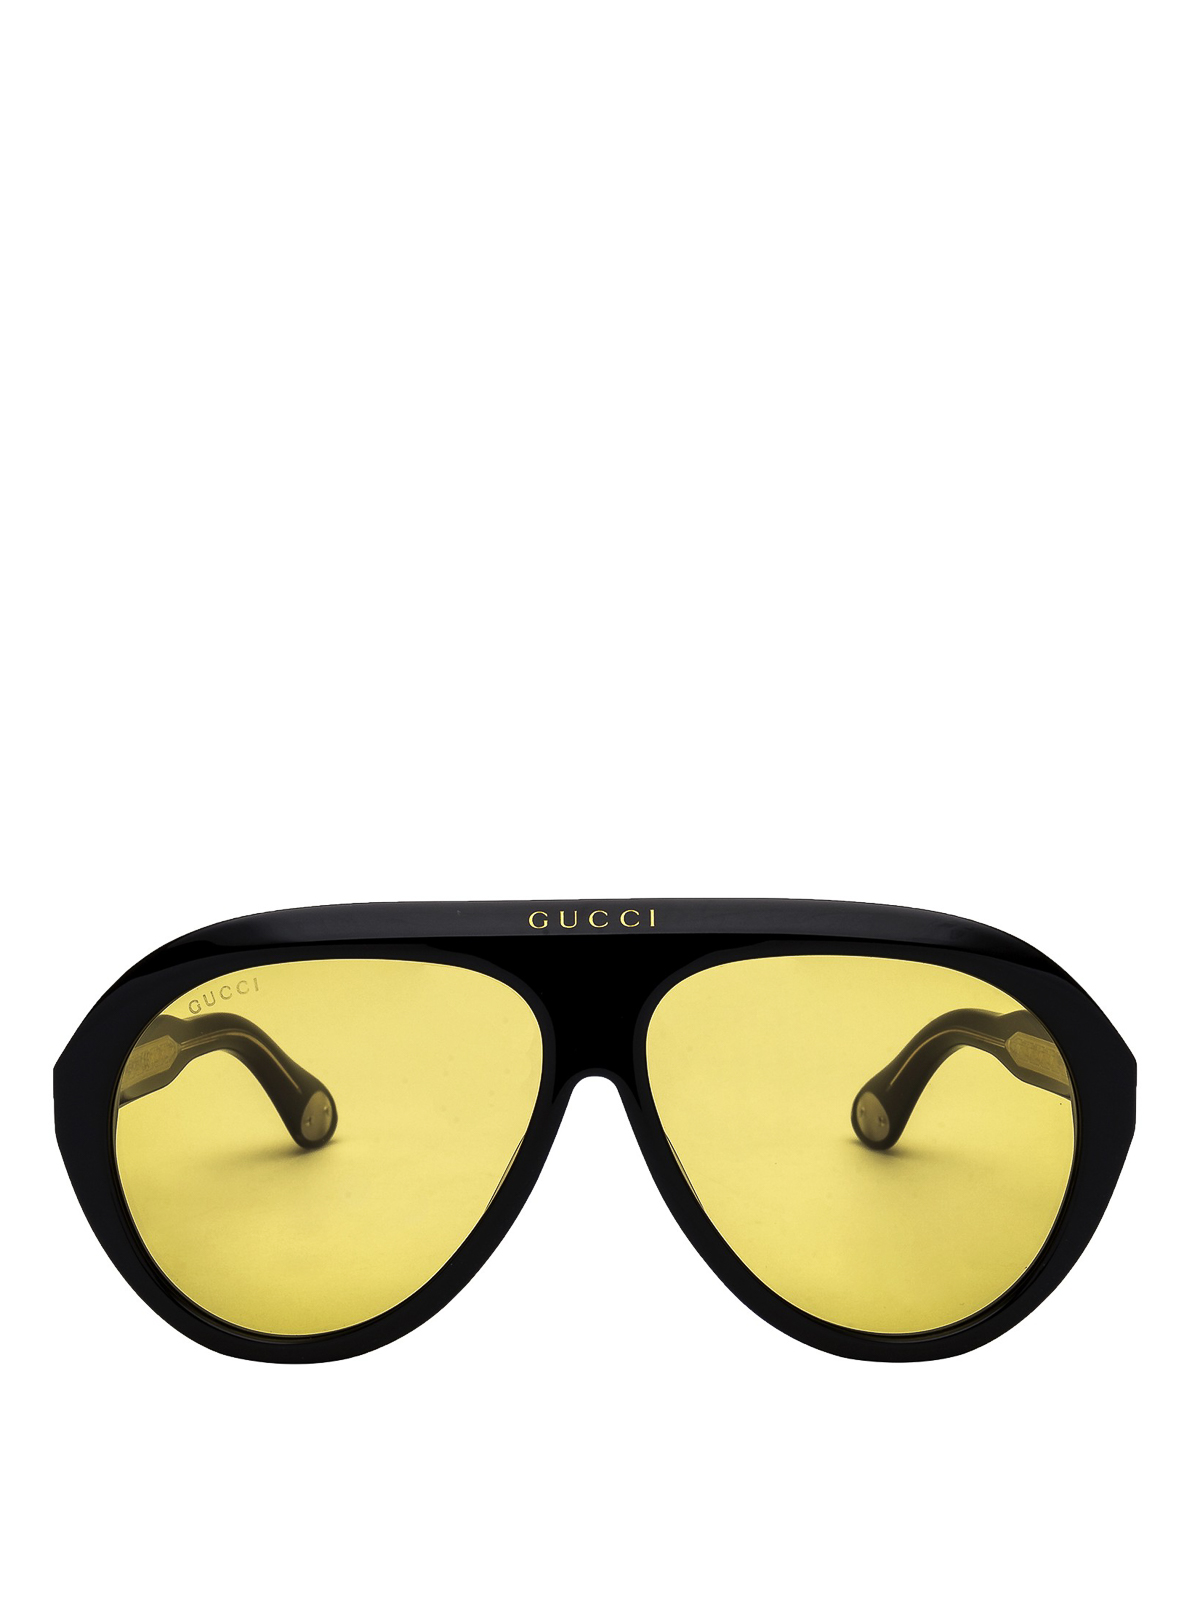 gucci yellow lens sunglasses